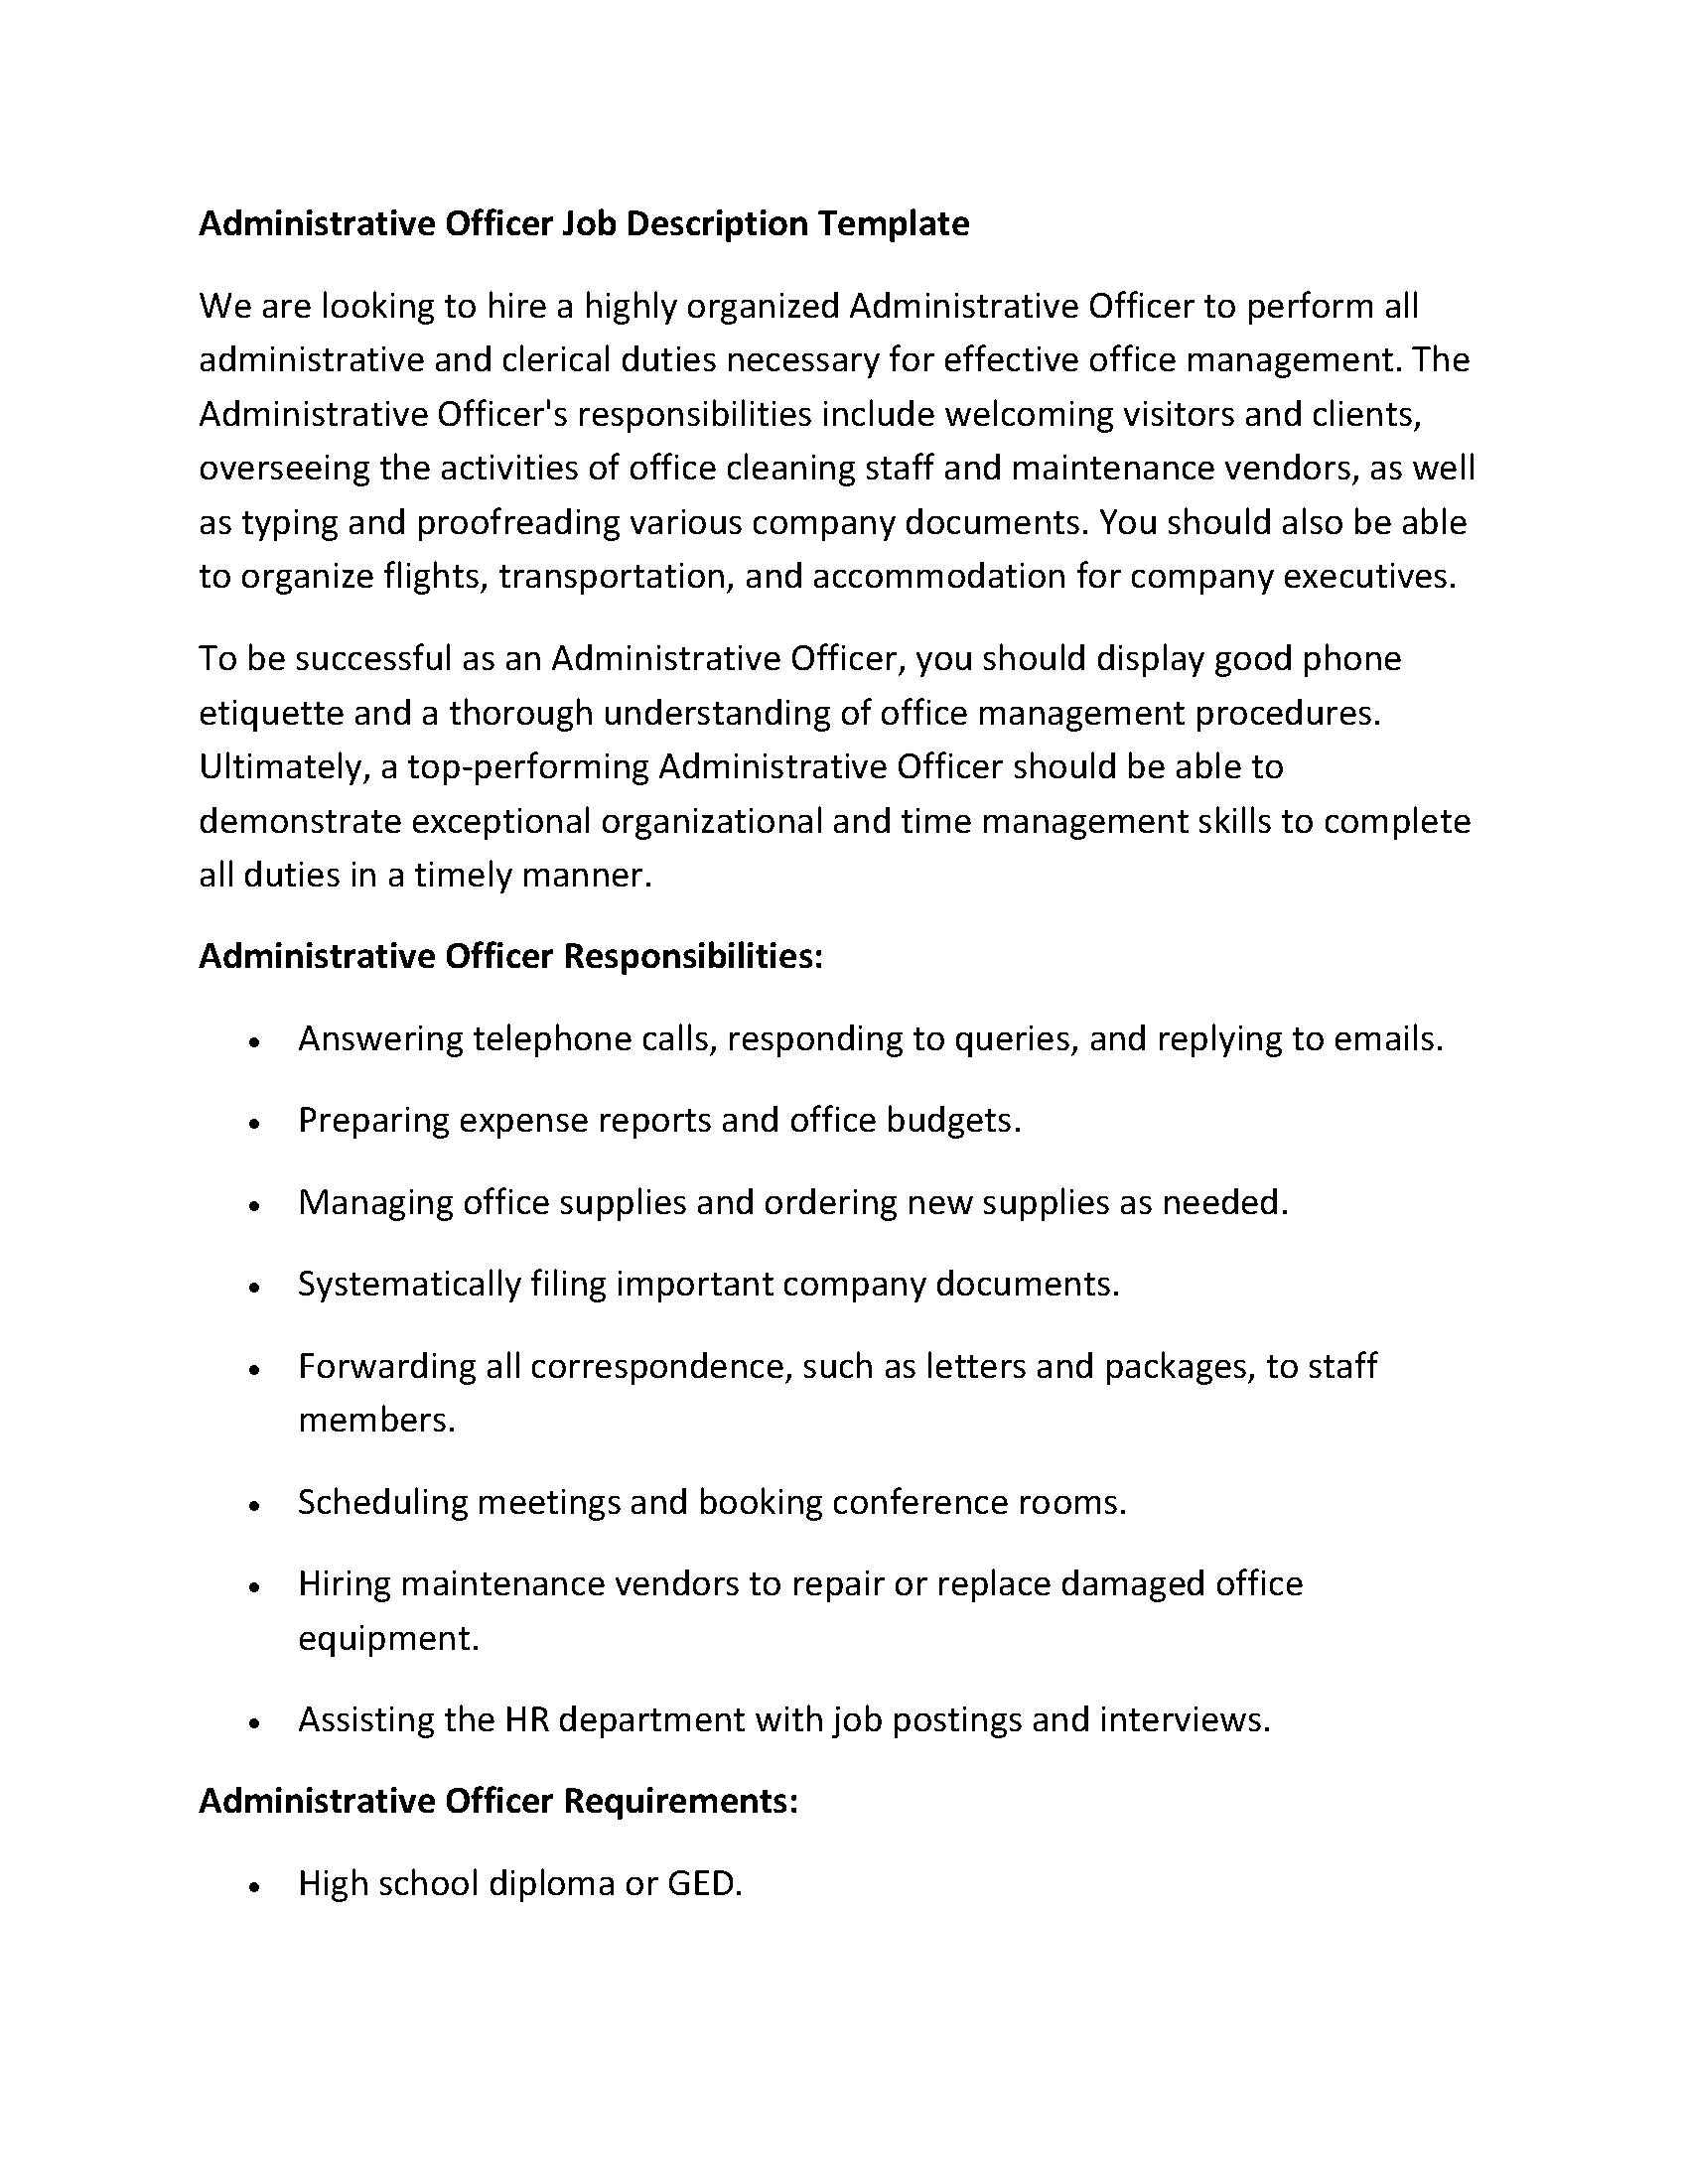 Administrative Officer Job Description Template